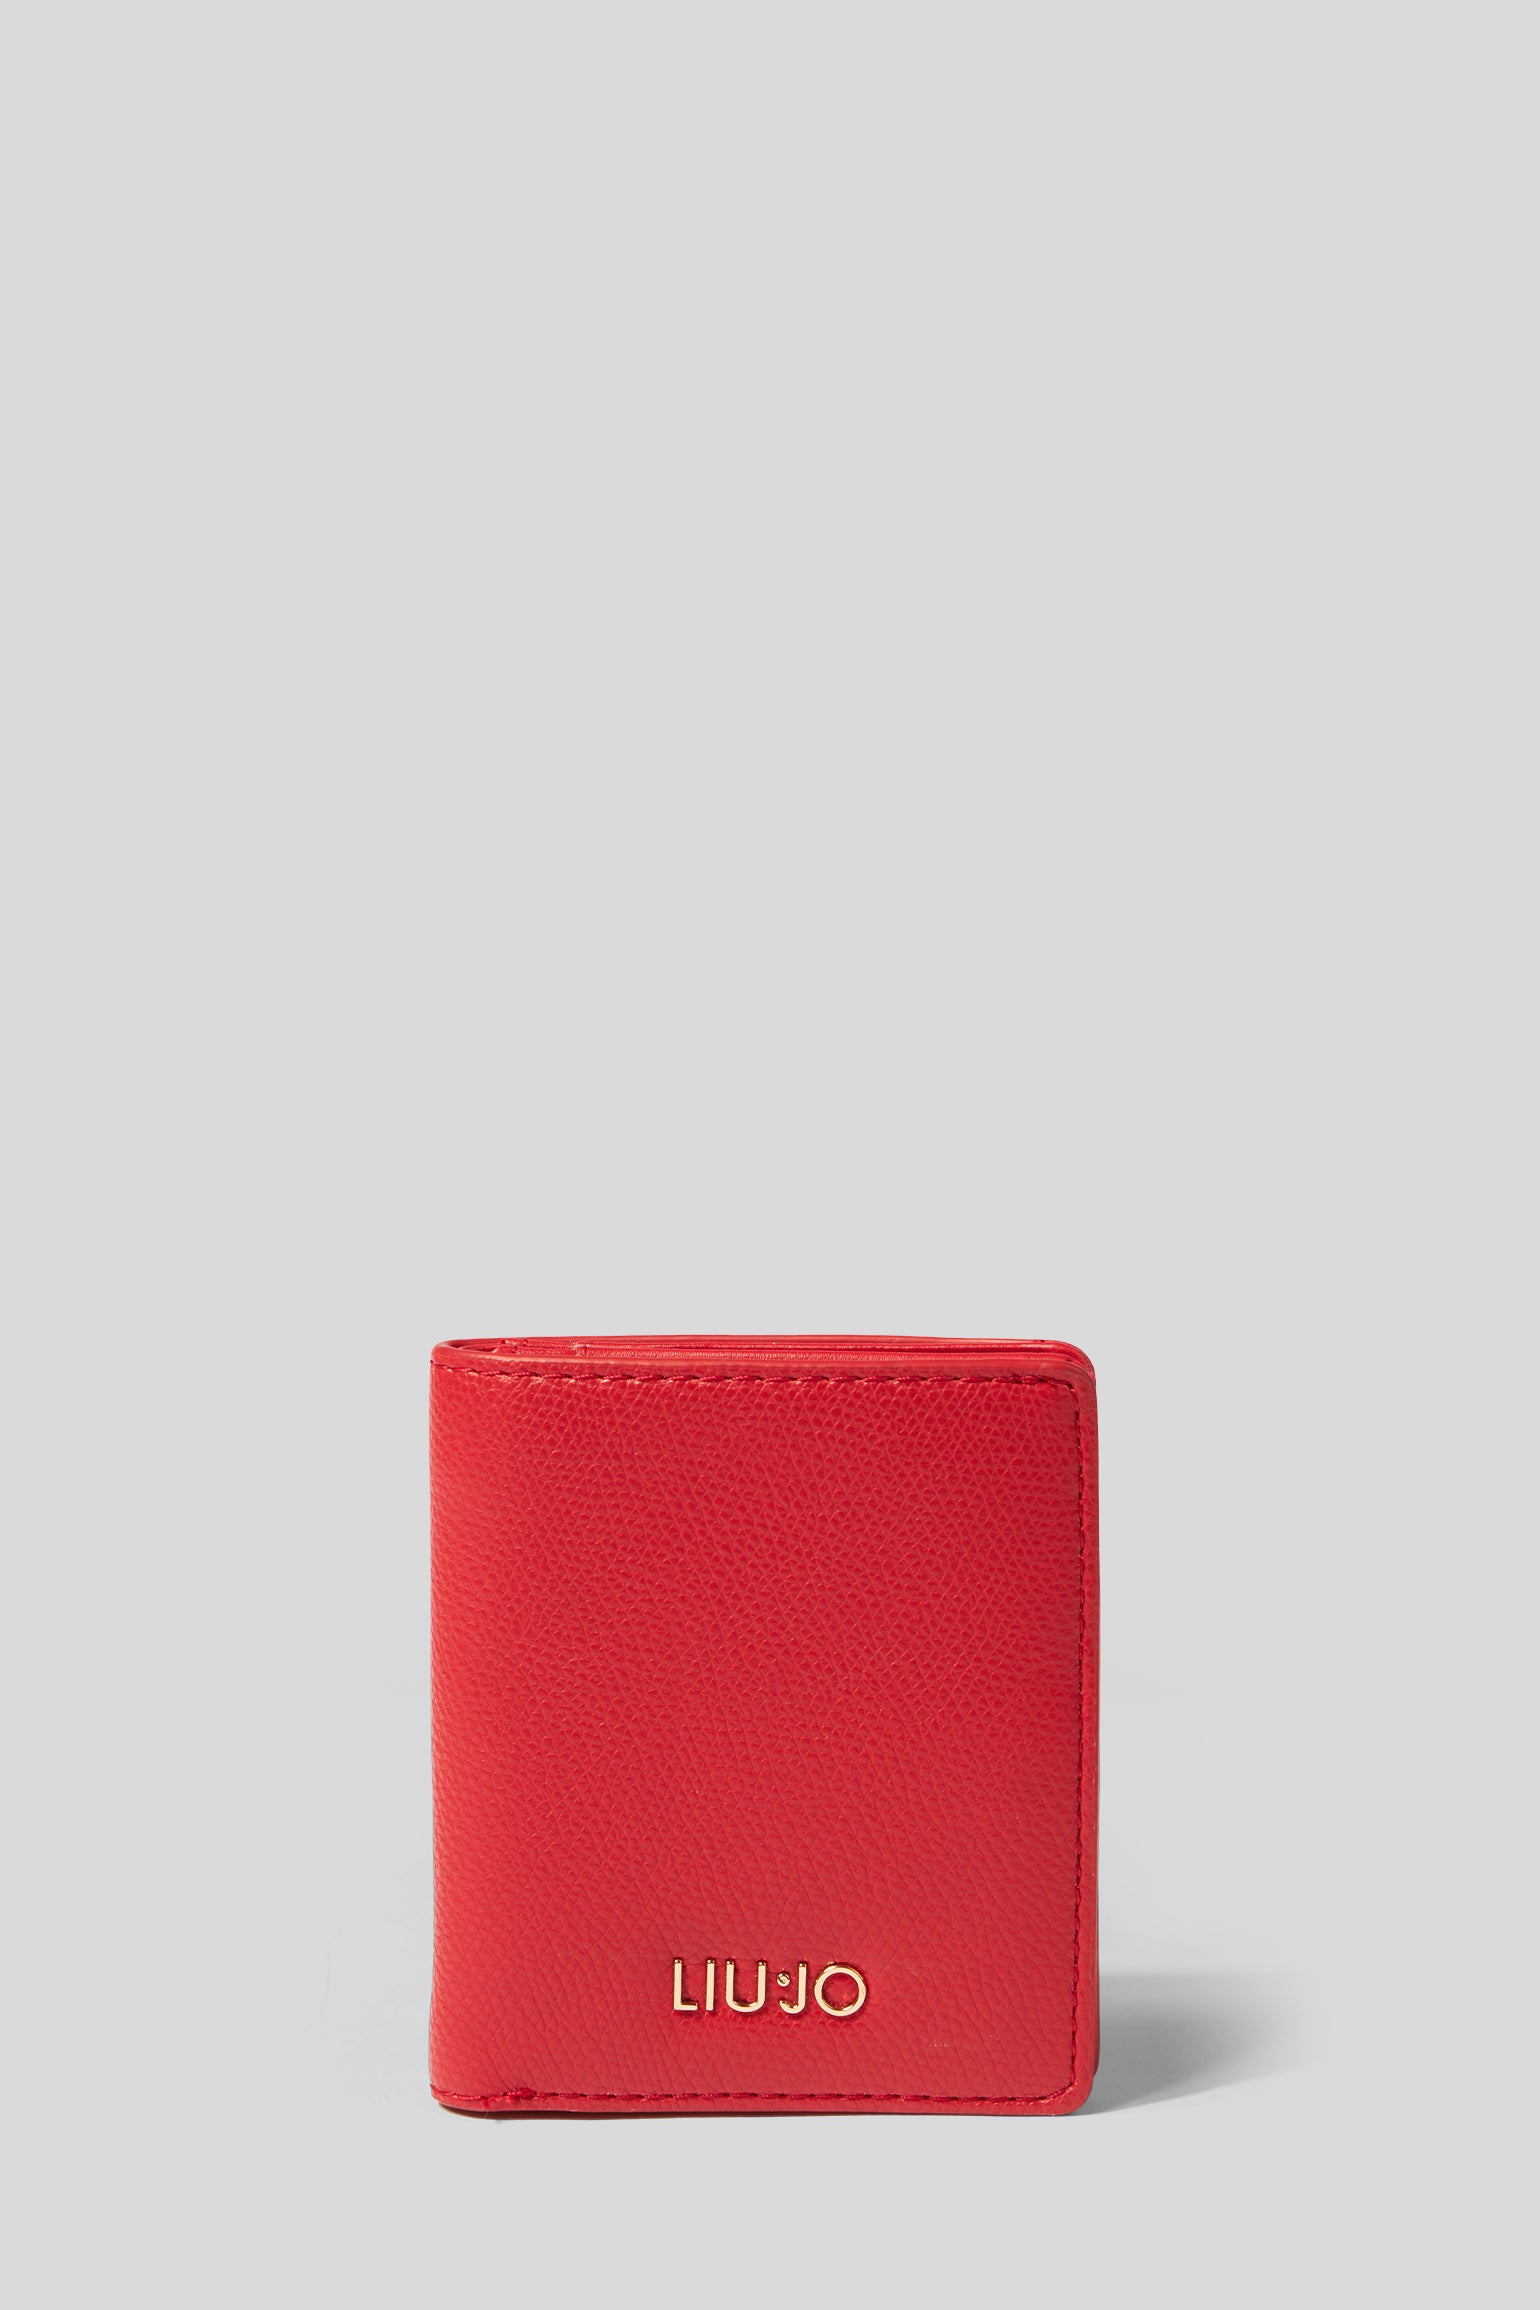 LIU JO Small Red Wallet